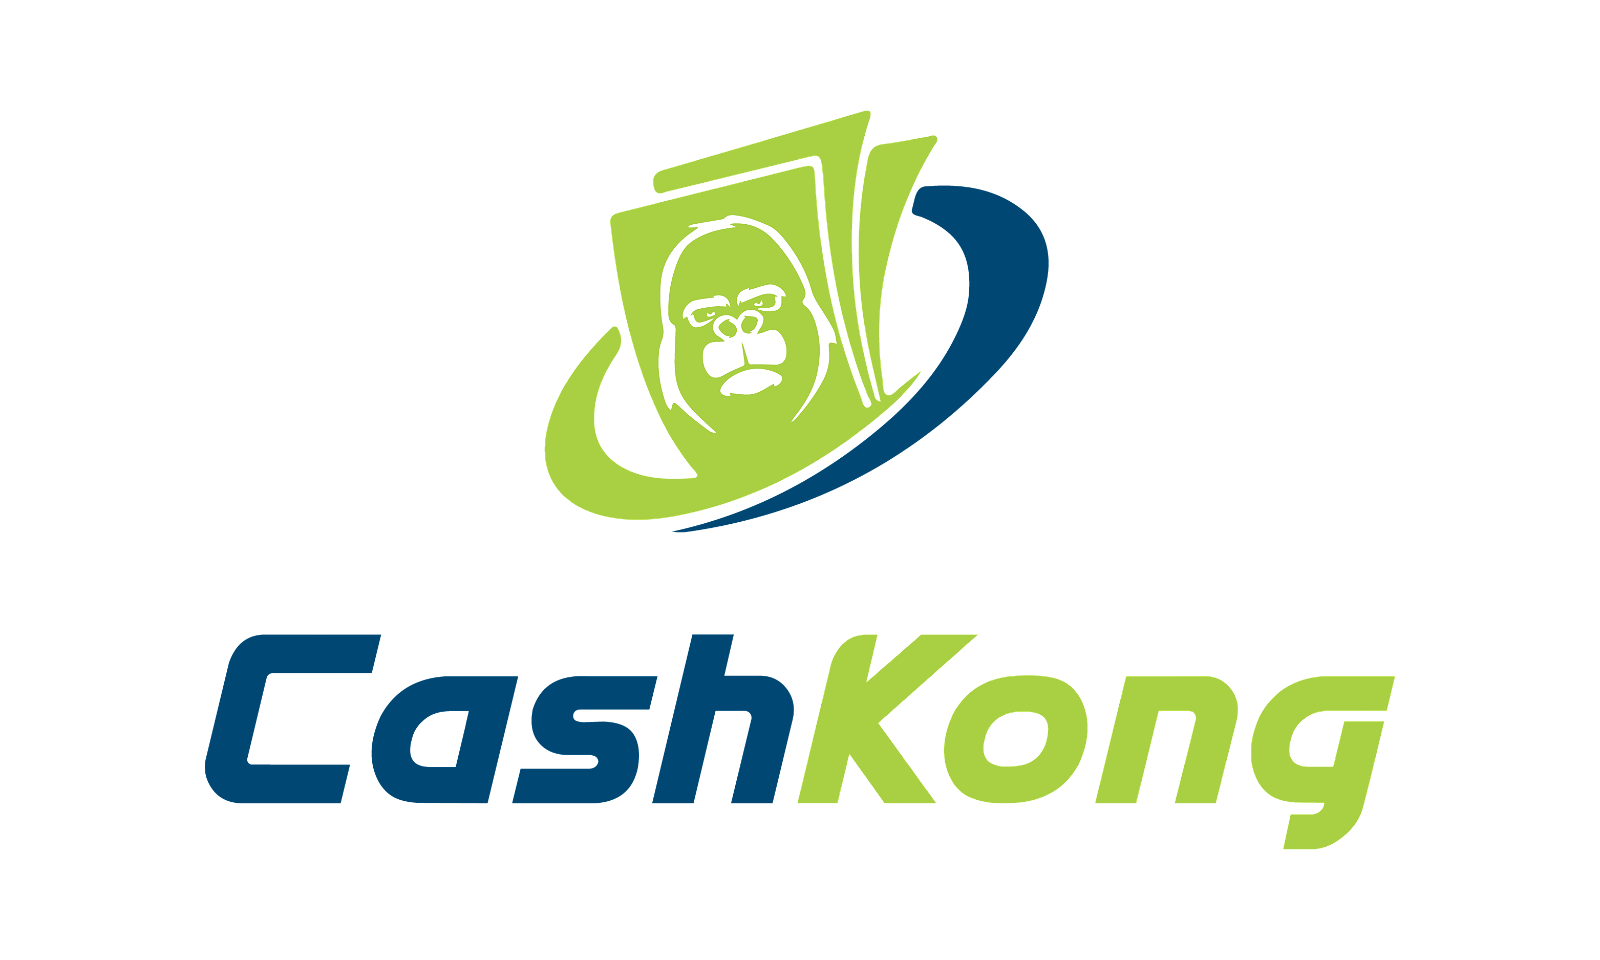 CashKong.com - Creative brandable domain for sale